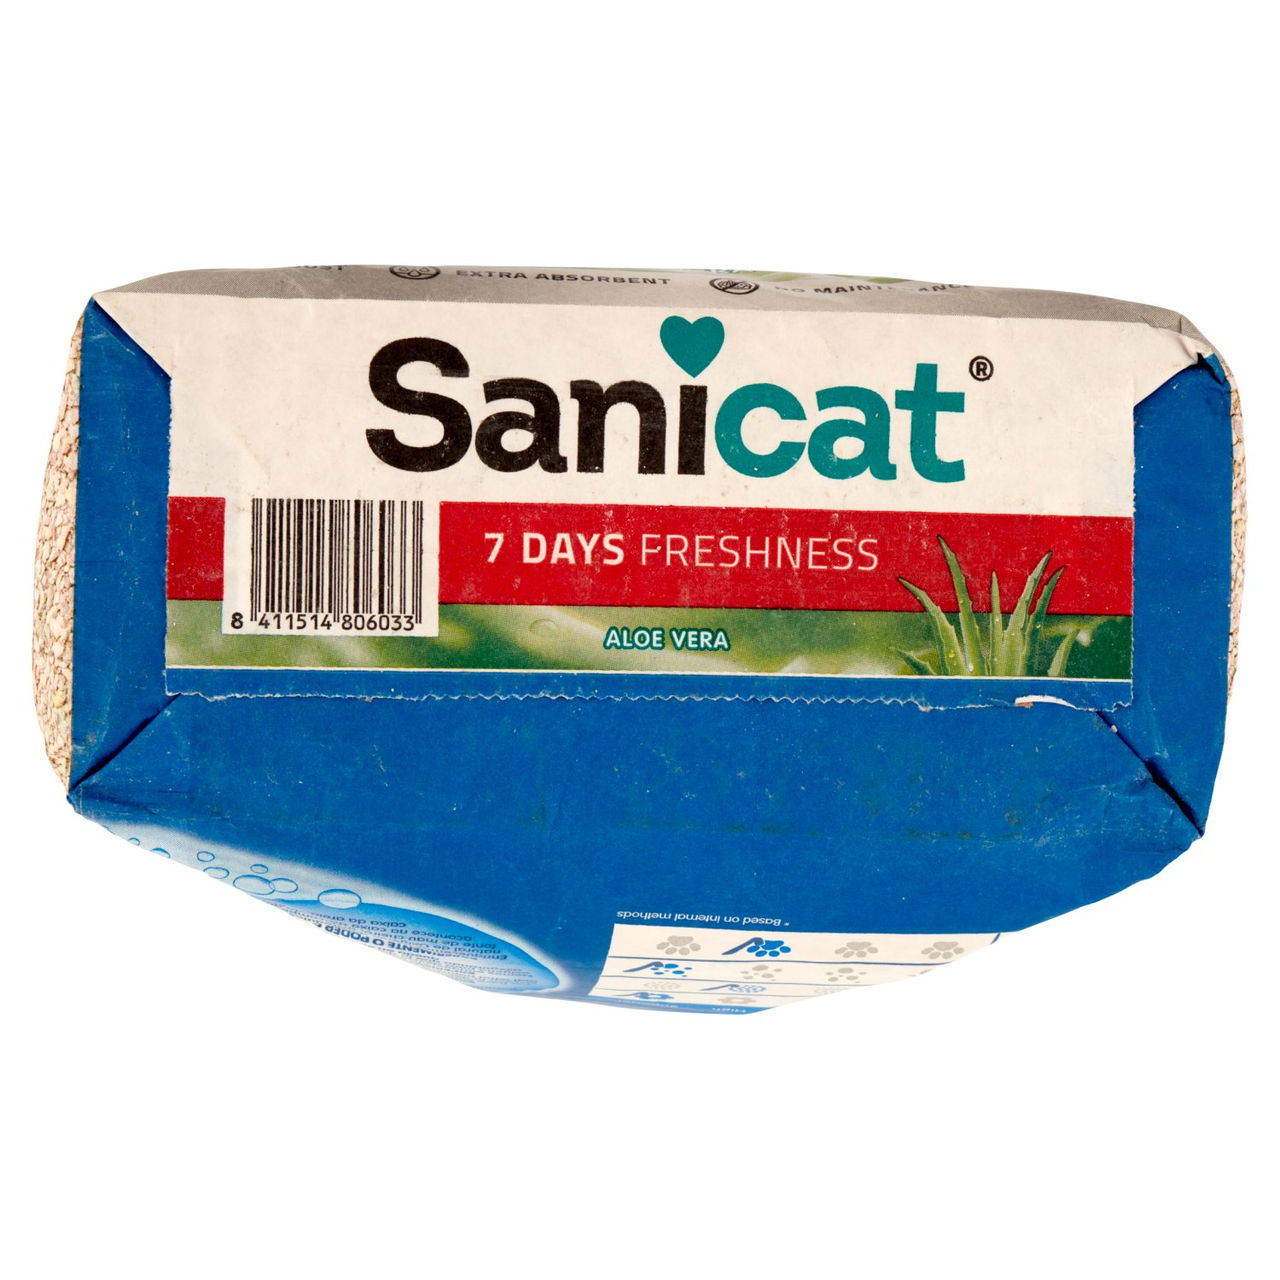 Sanicat 7 Days Freshness Aloe Vera 4 L